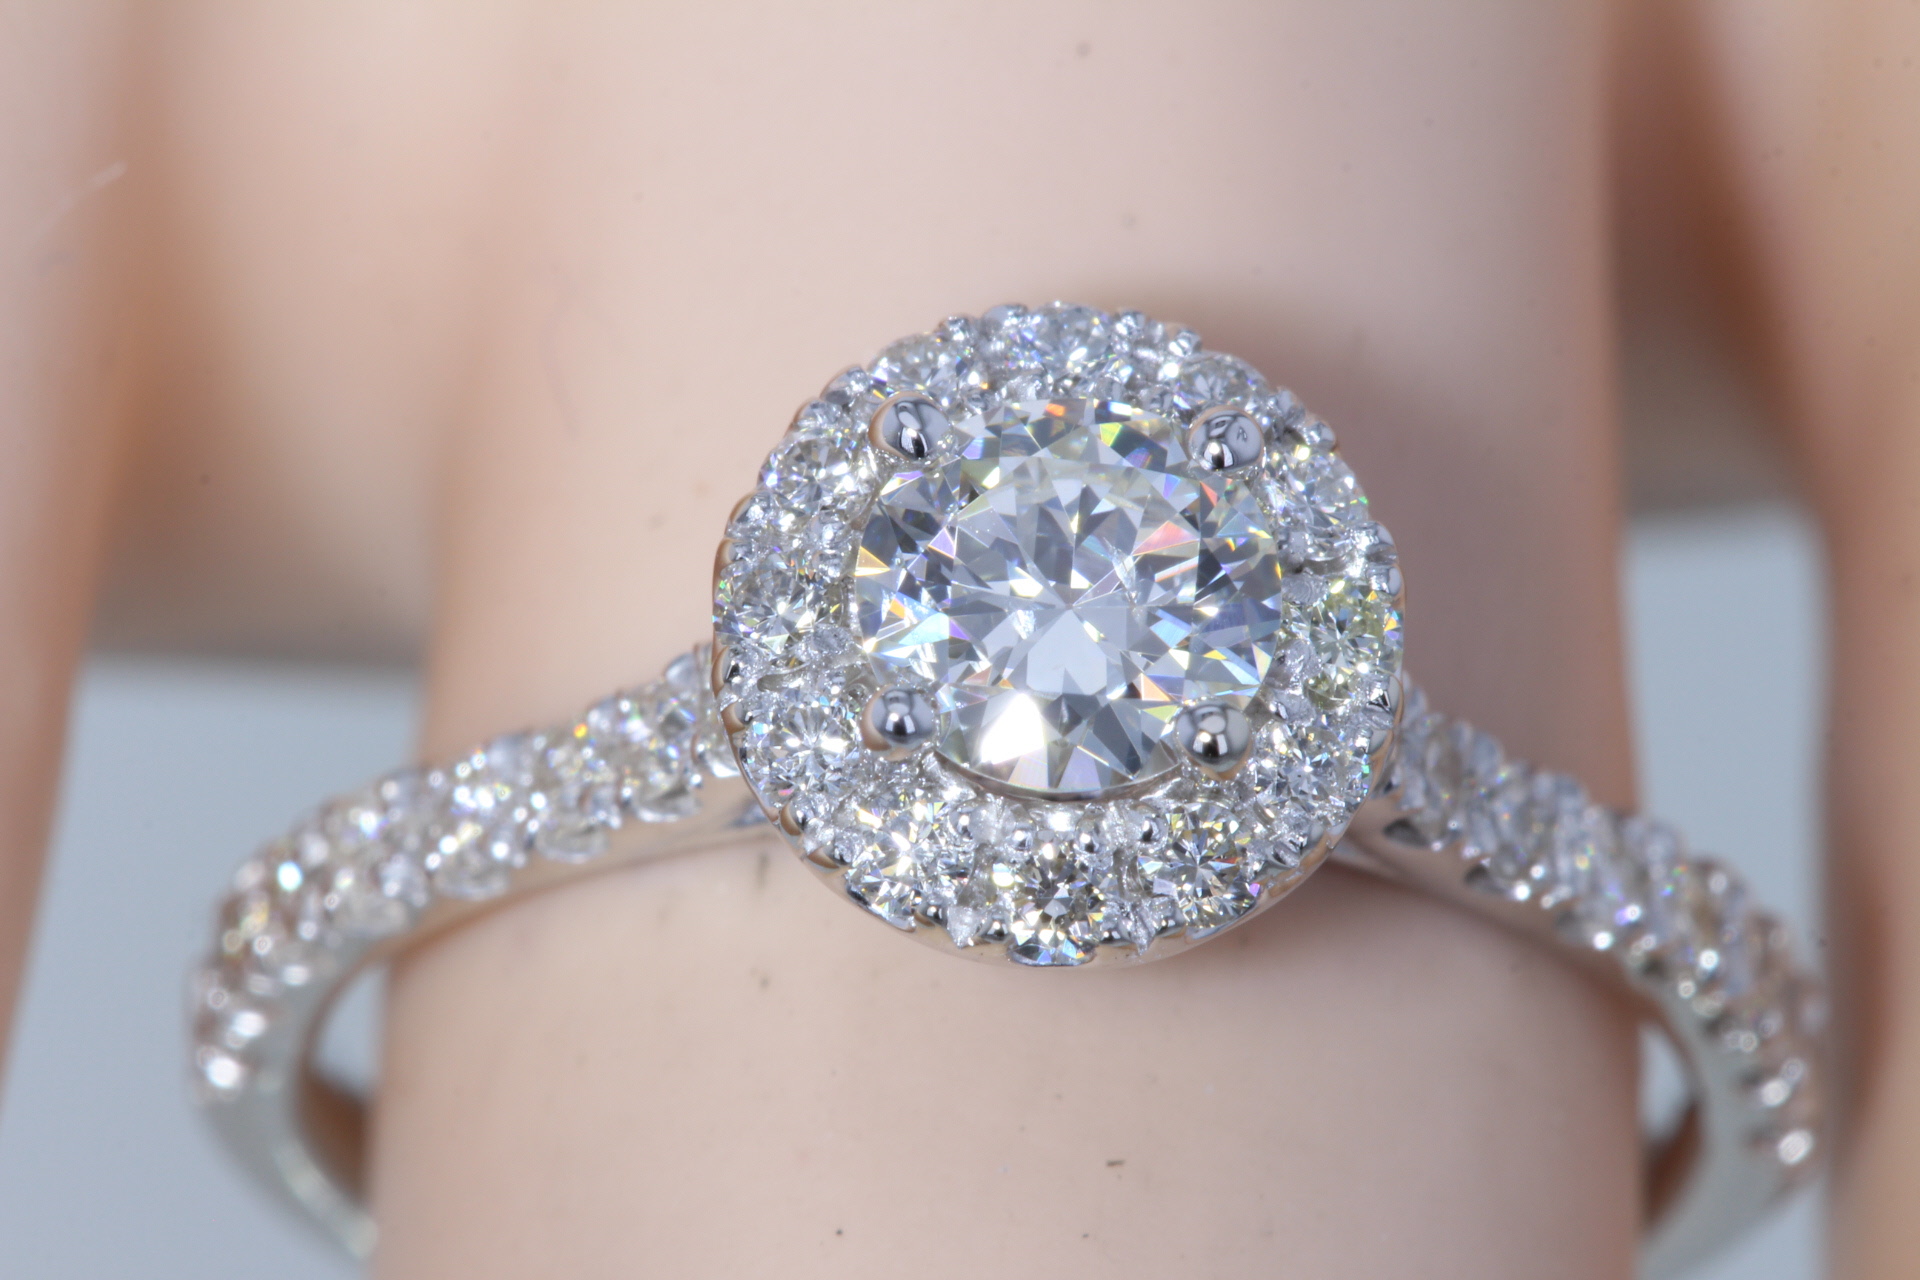 Christa Ready For Love Diamond Engagement Ring 1CT – Steven Singer Jewelers